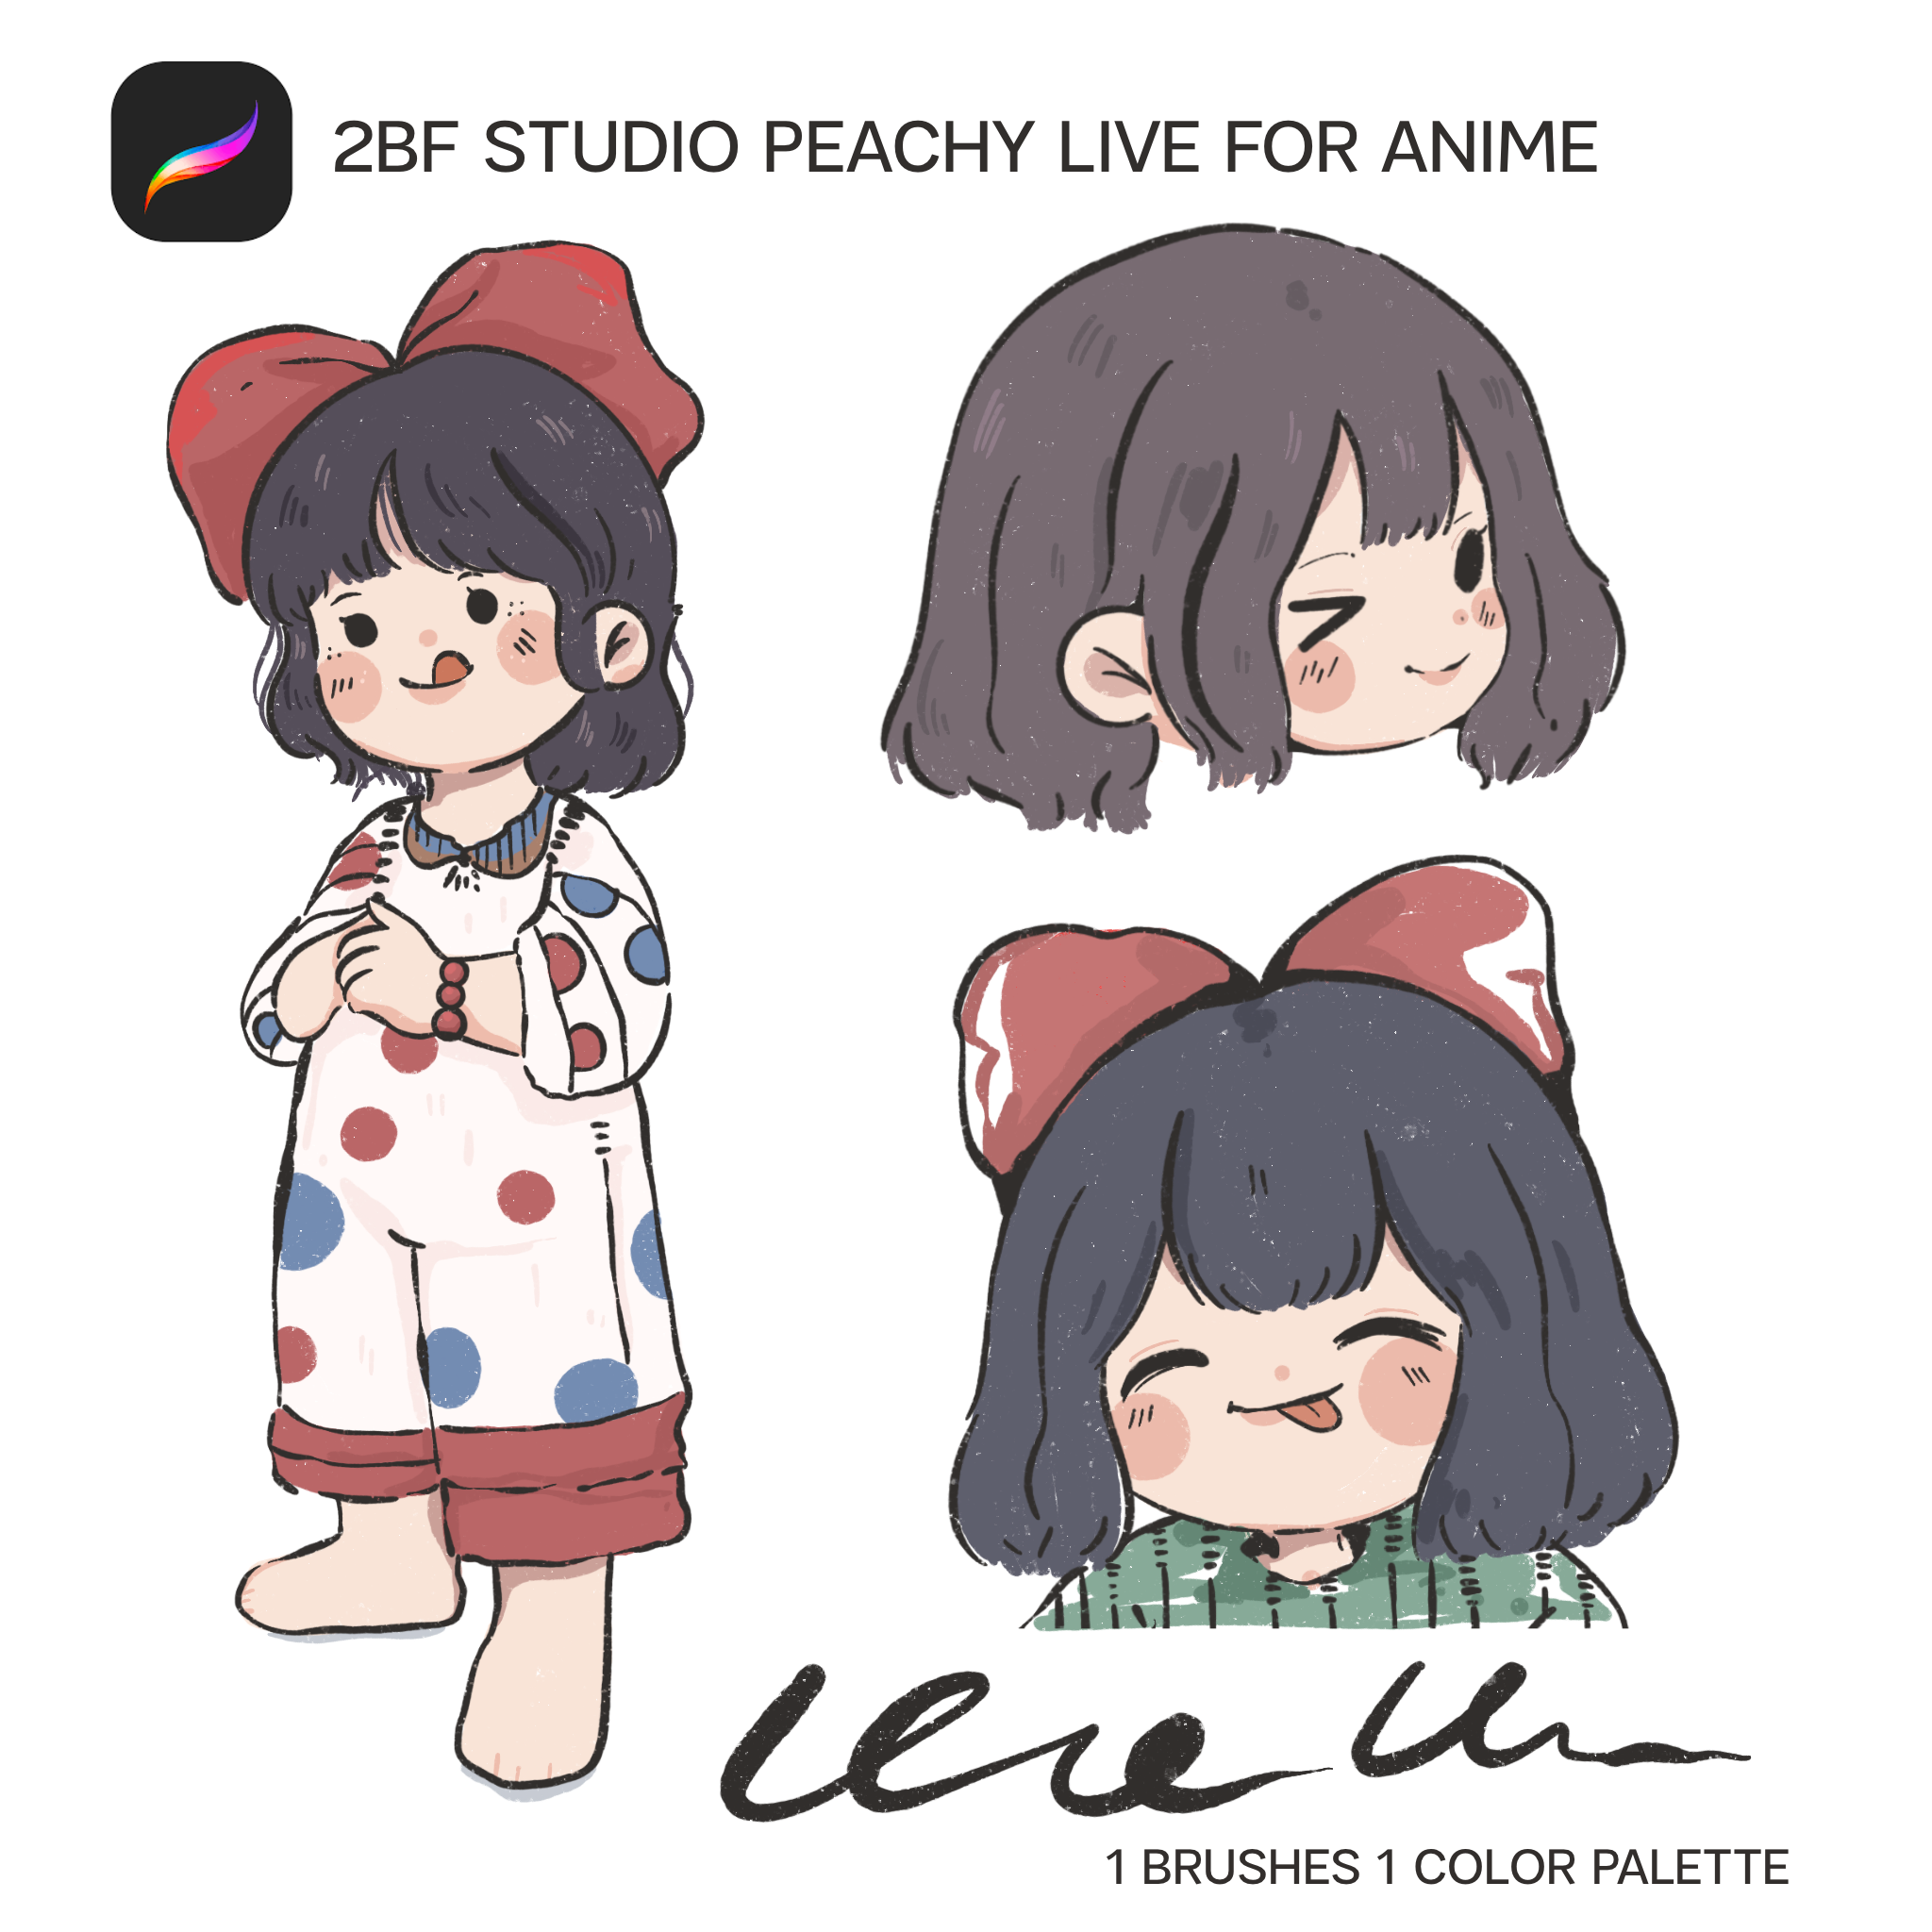 2BF STUDIO Peachy Live For Anime